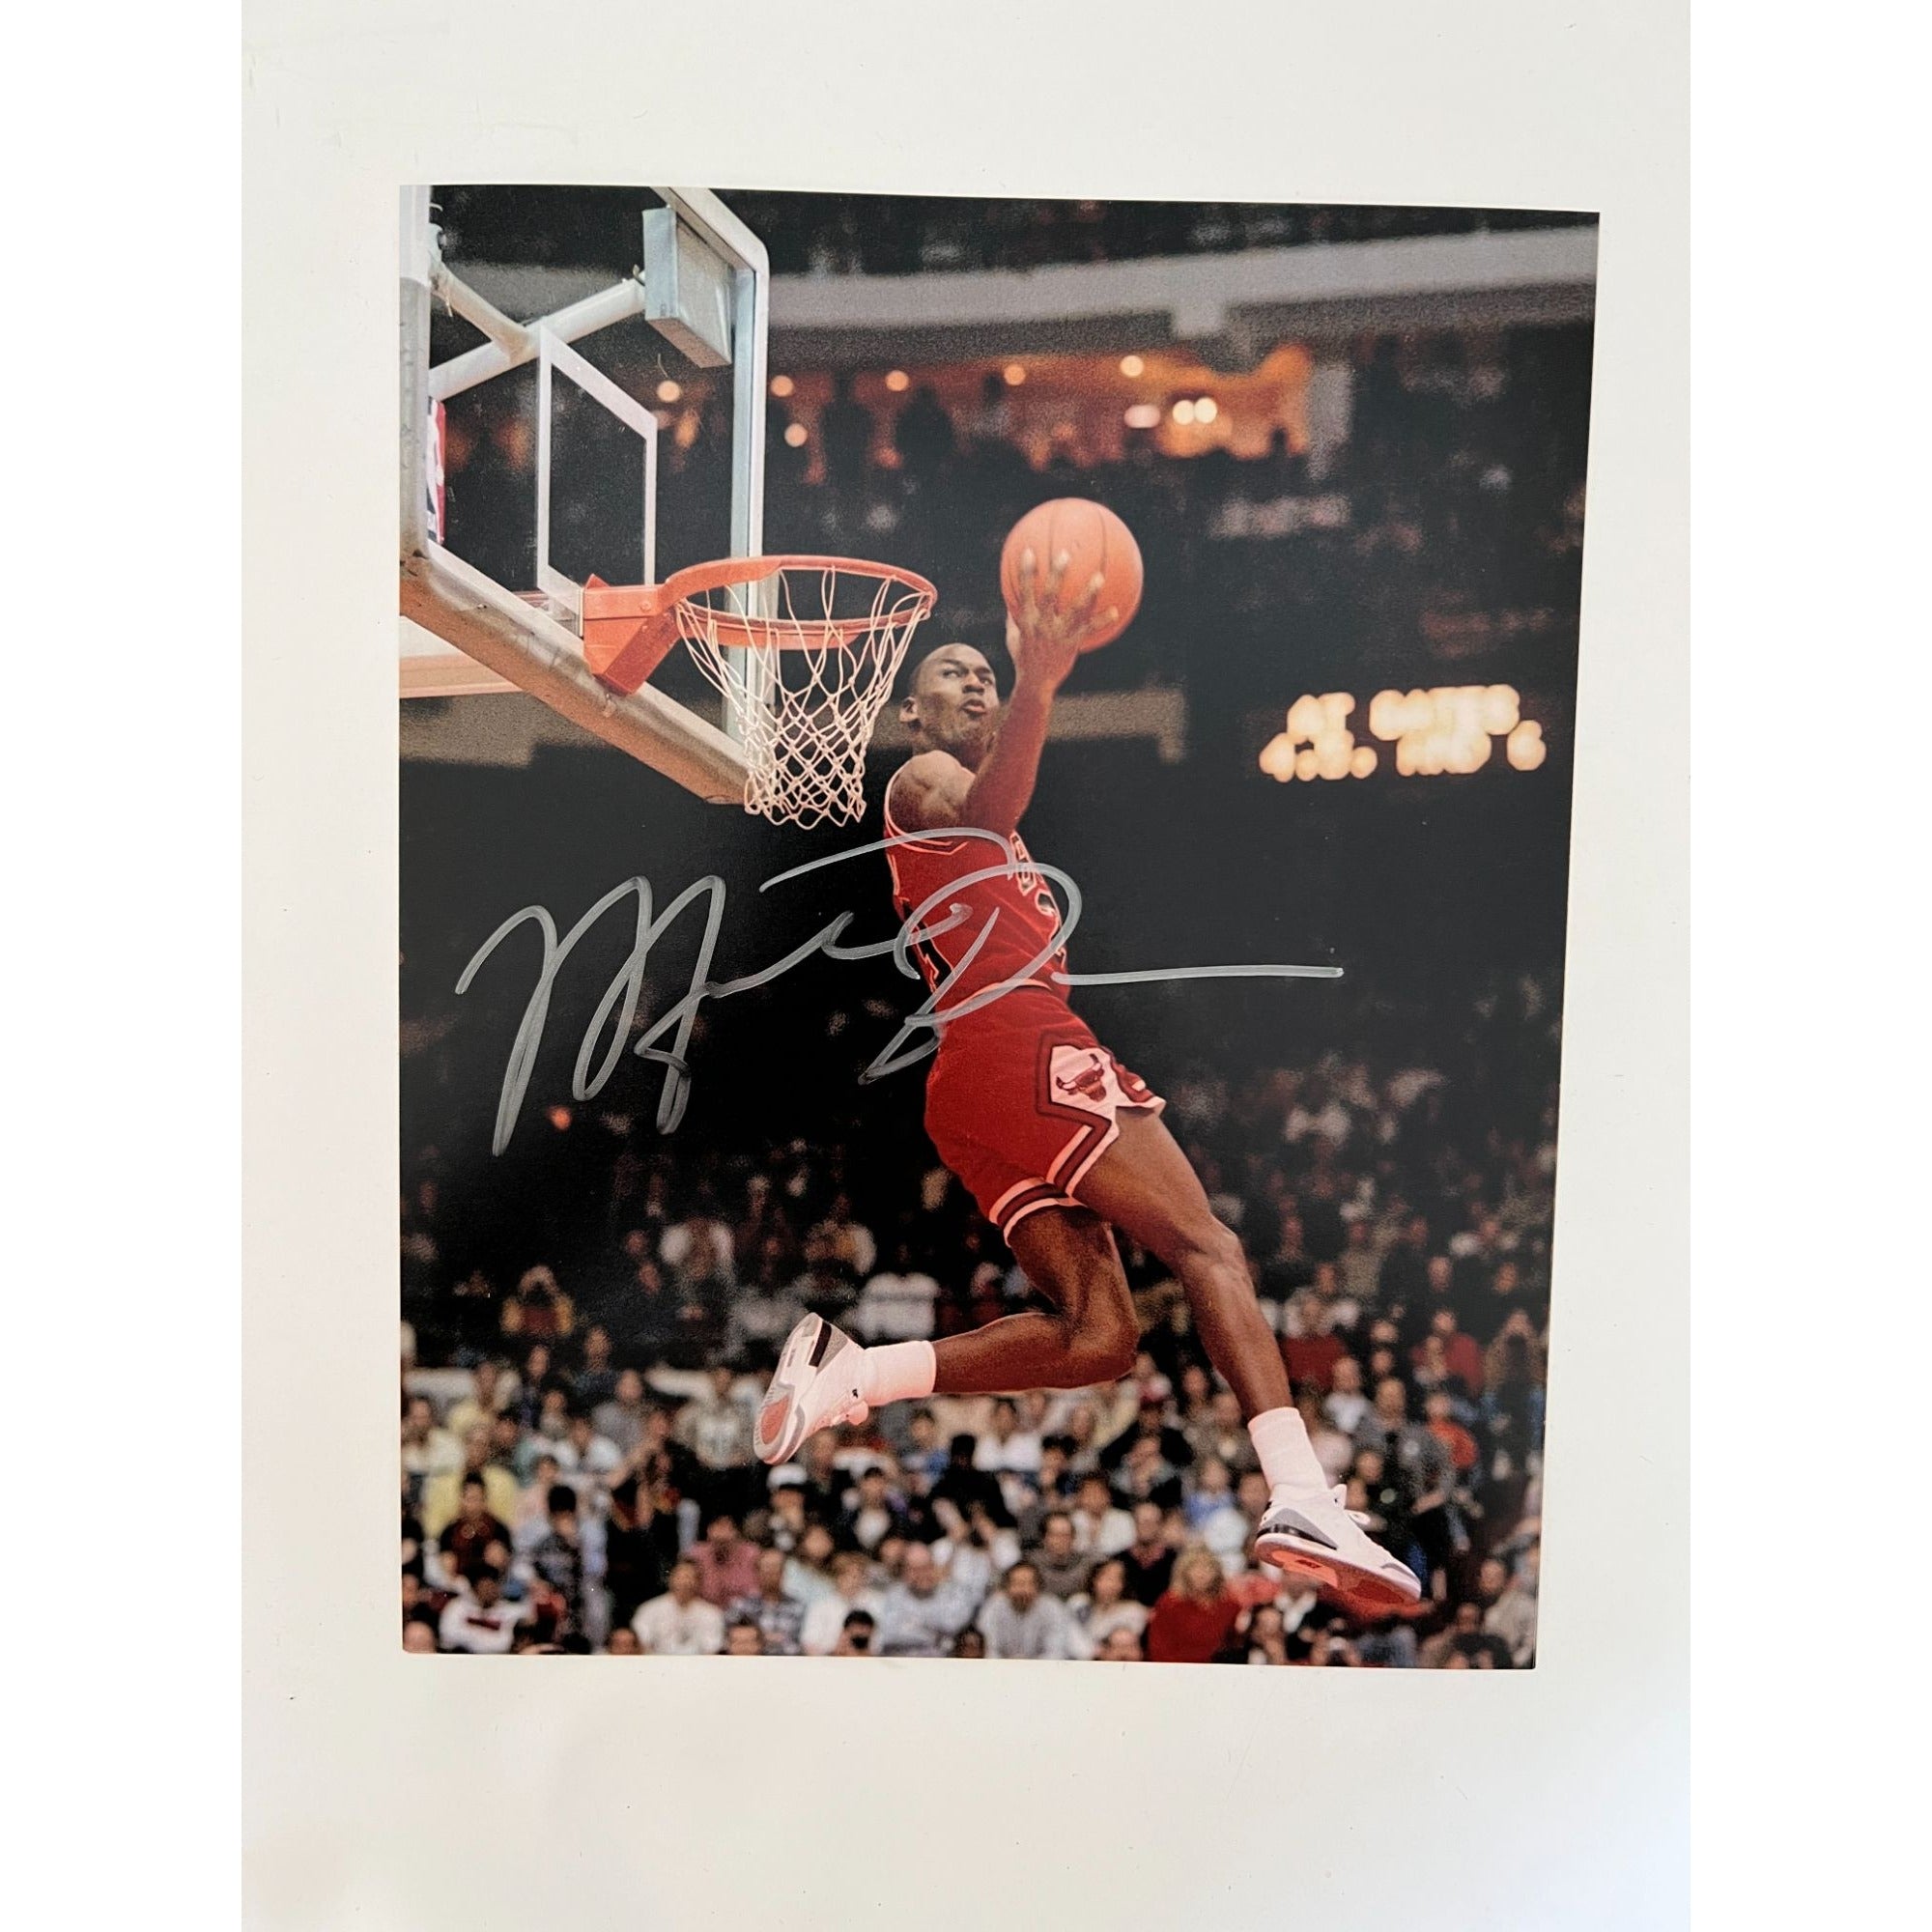 Michael Jordan vintage Chicago Bulls 8x10 photo signed with proof $599 or $799 framed